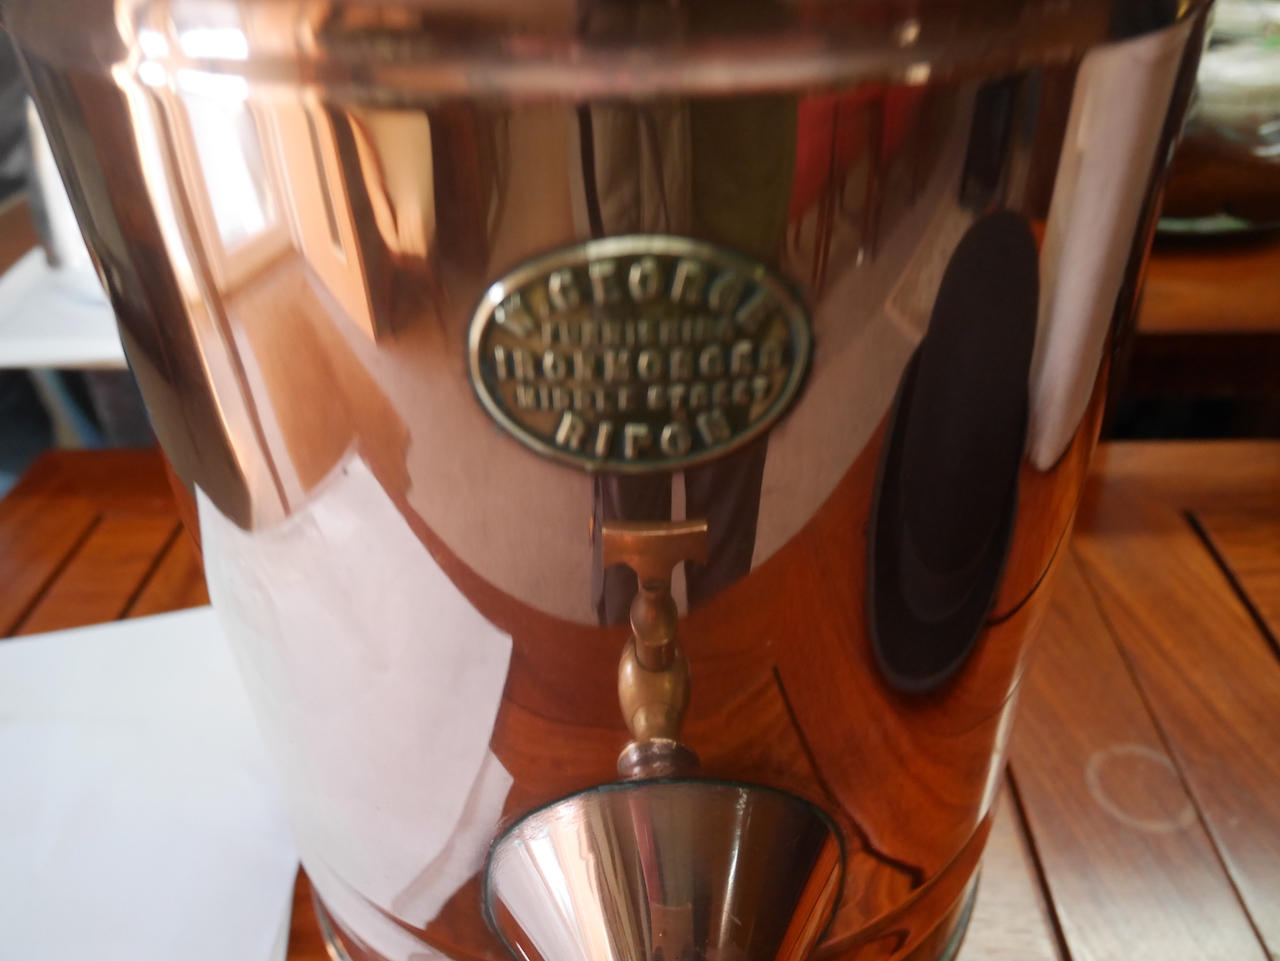 Copper tea urn "W George Ripon" - Image 2 of 3